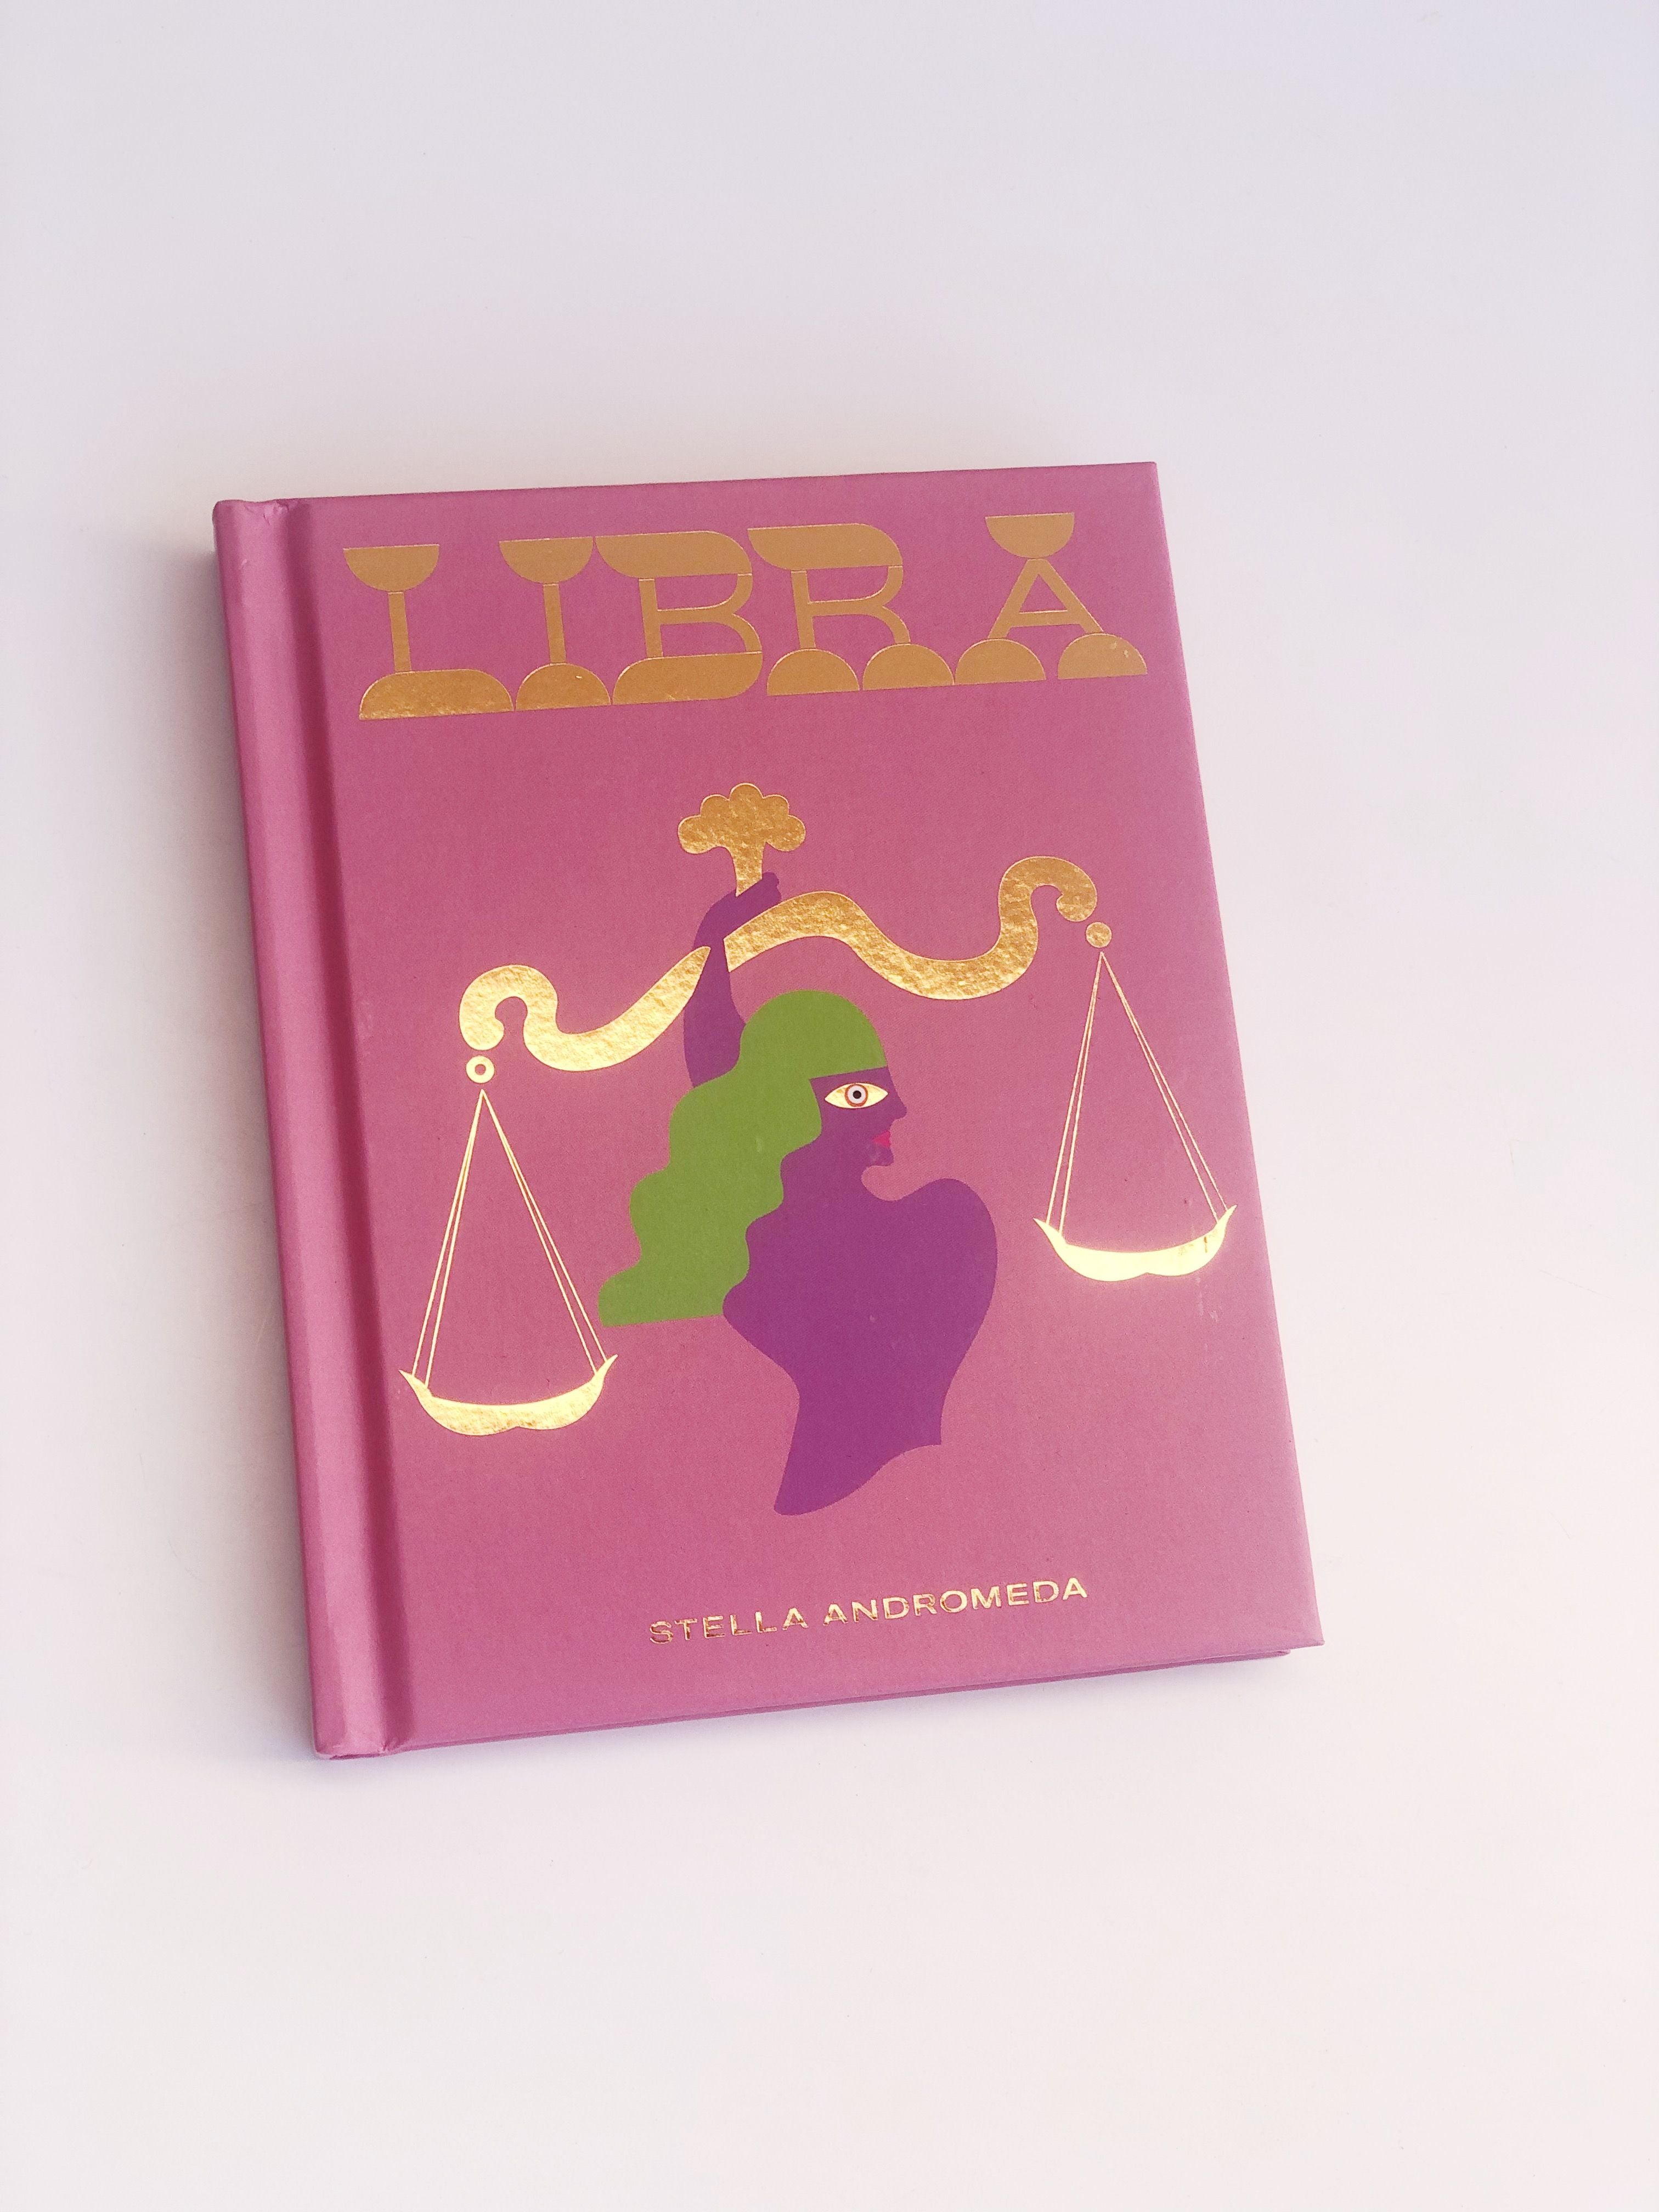 The Libra Book